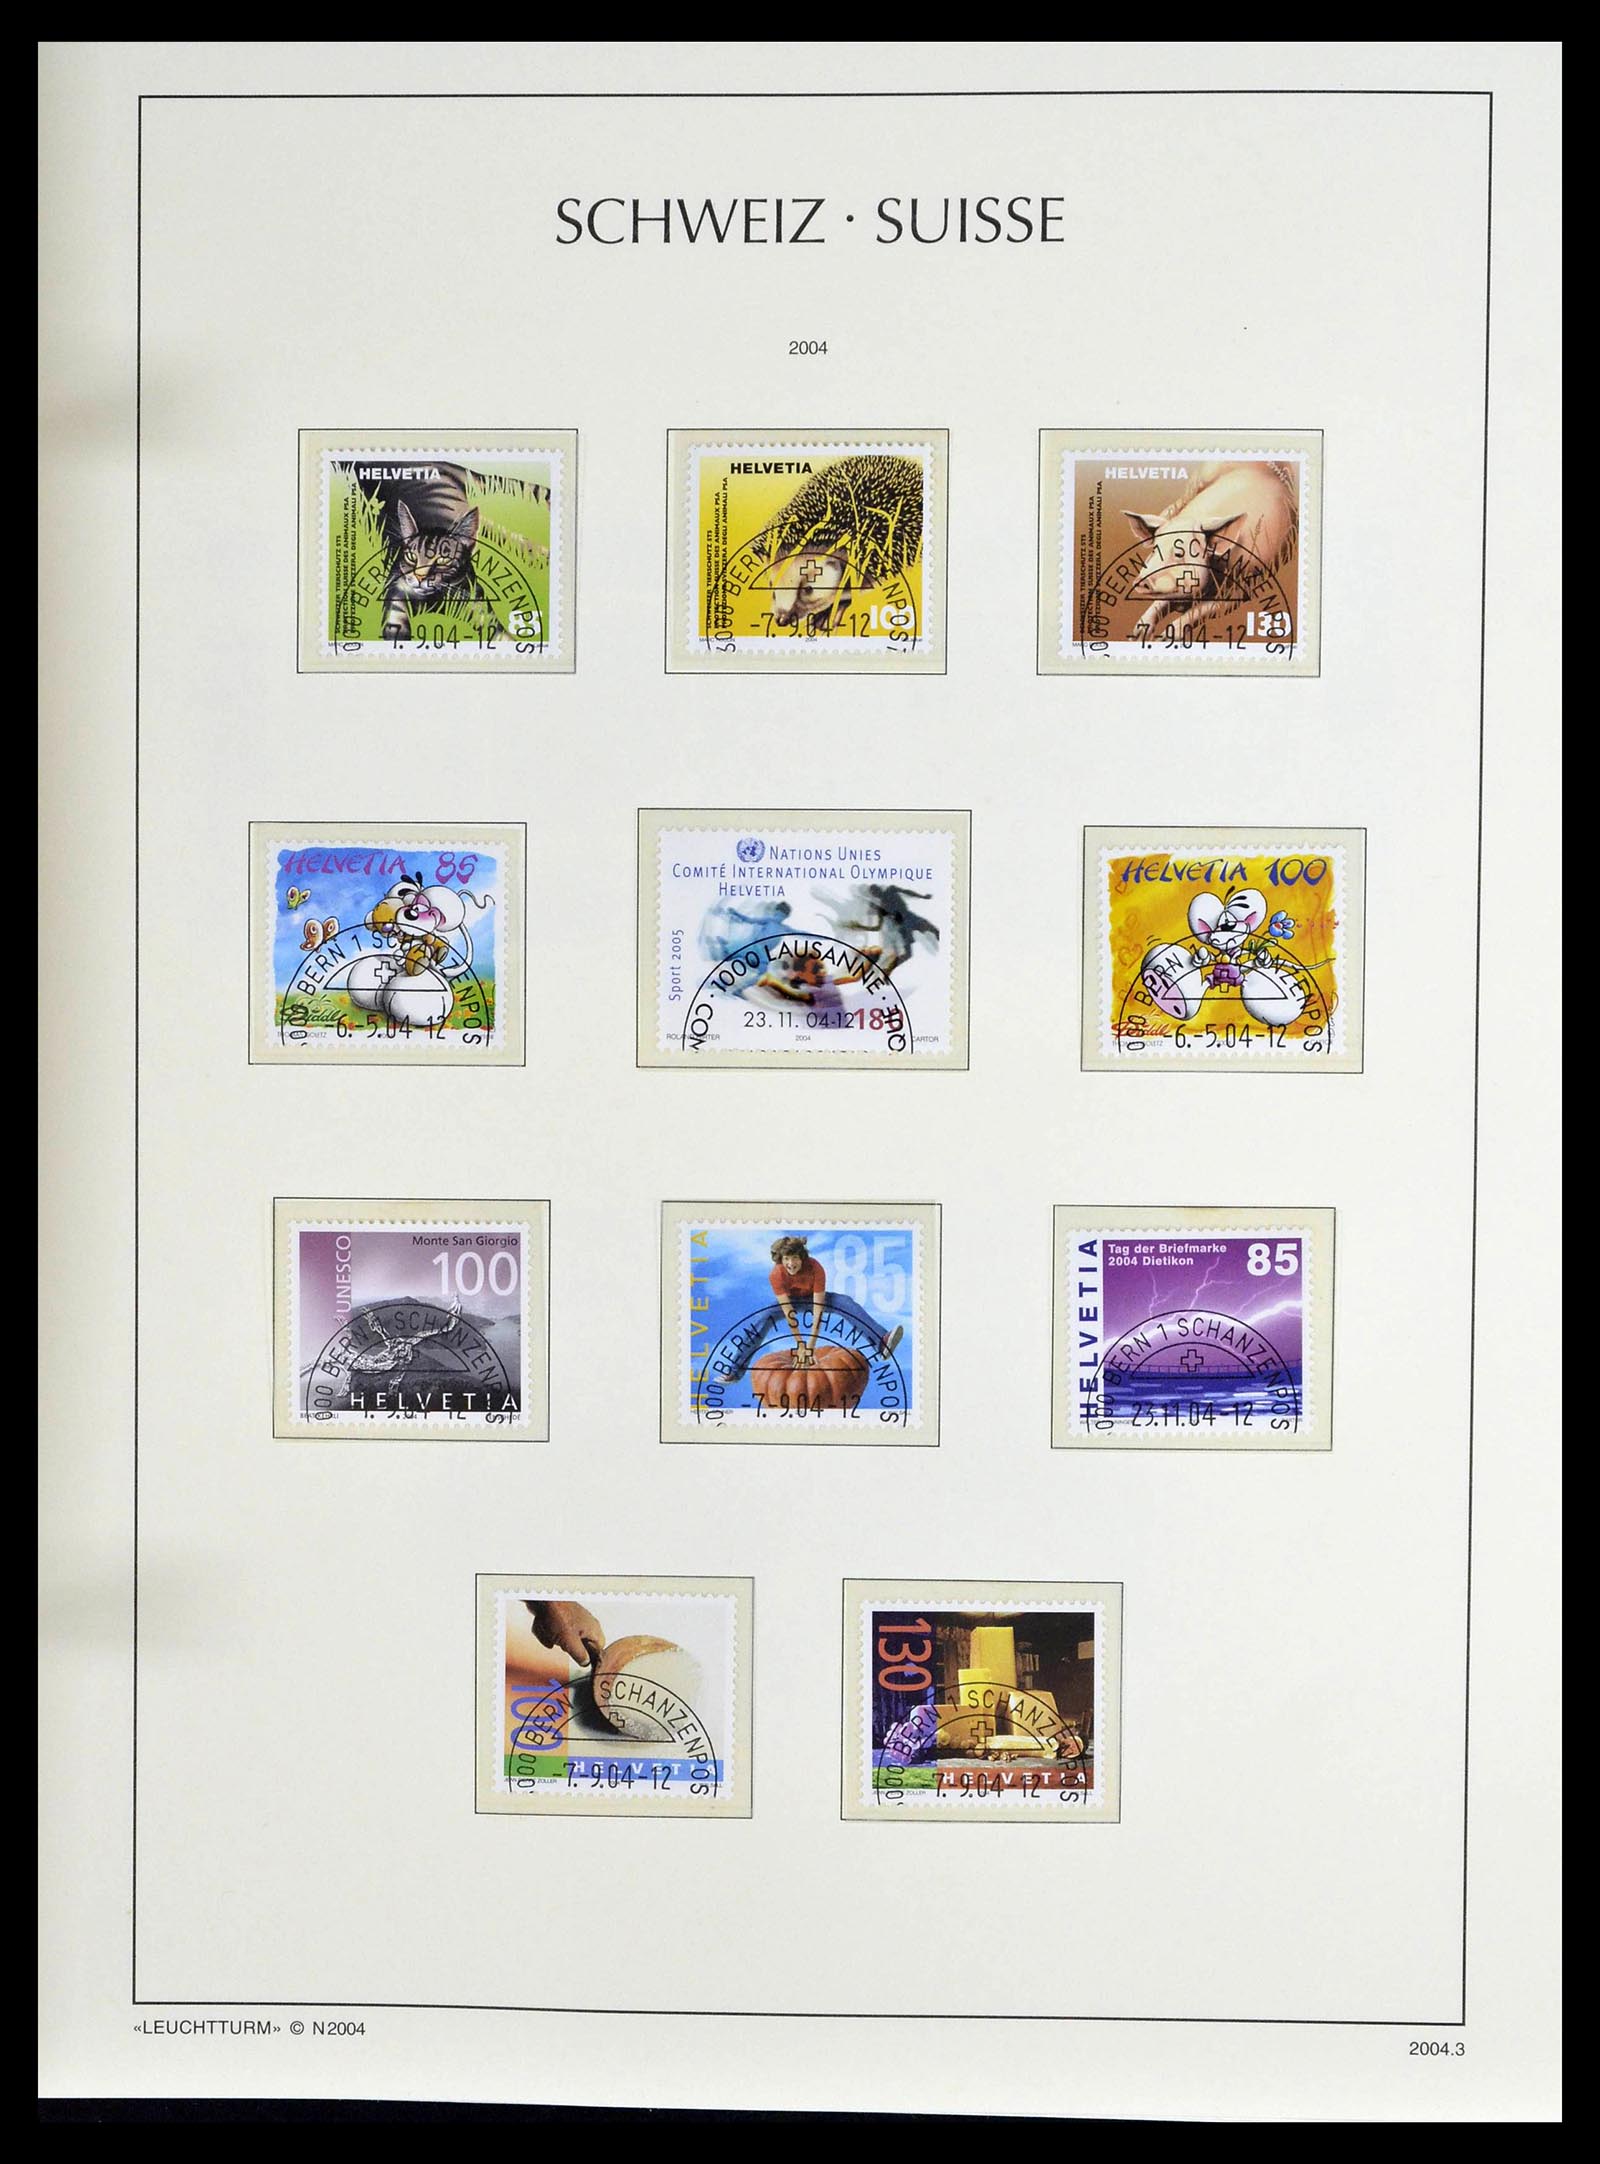 39094 0141 - Stamp collection 39094 Switzerland 1850-2005.